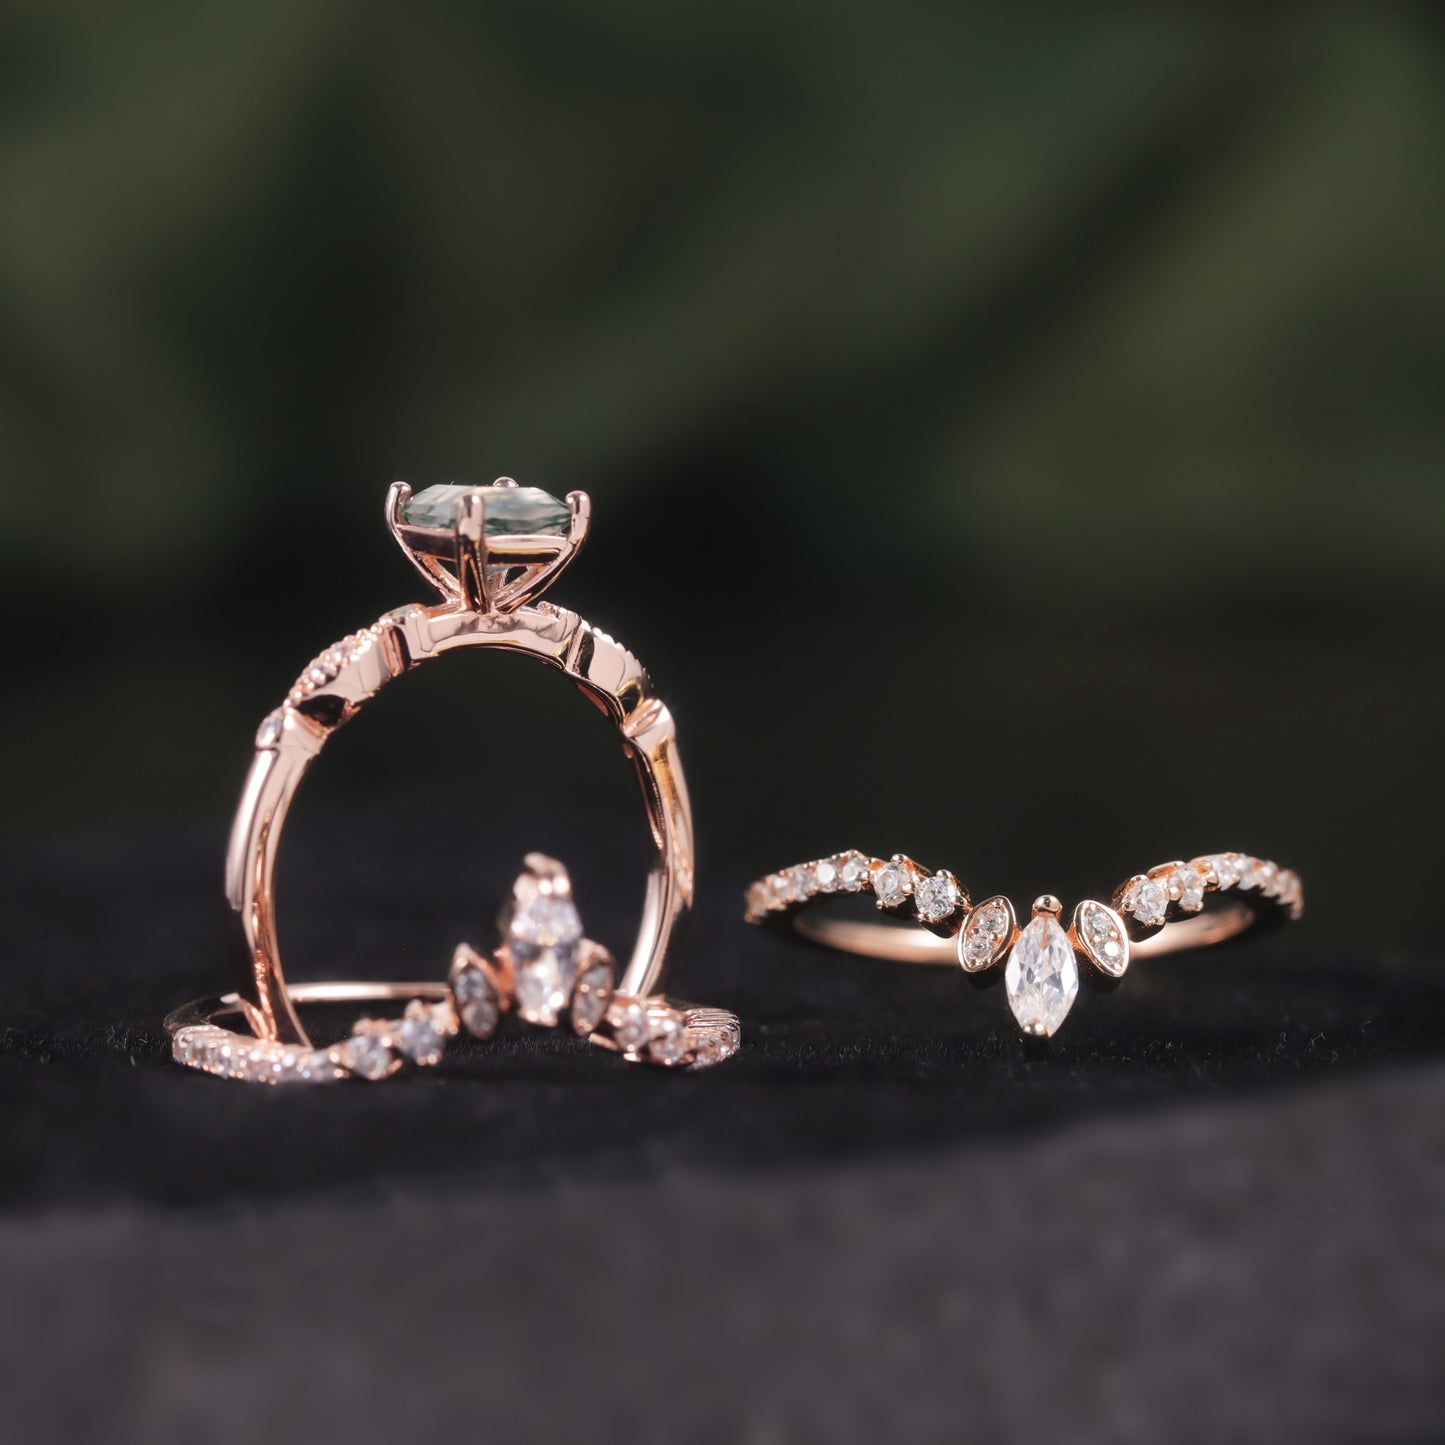 Princess Cut Moss Agate Vintage Engagement Ring